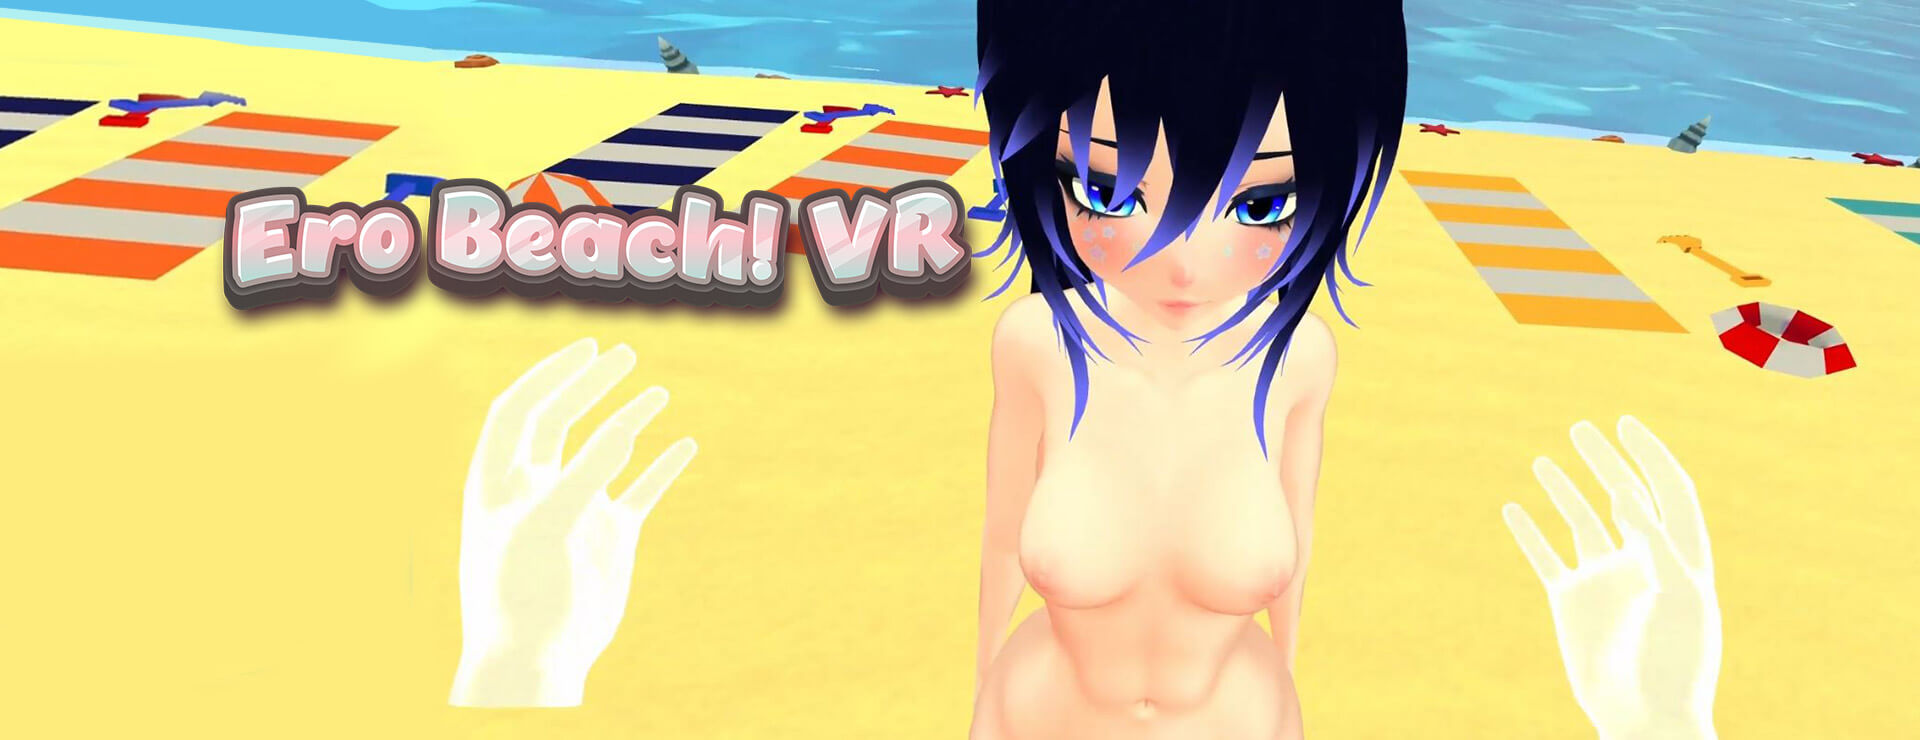 Ero Beach! VR - Simulation Game